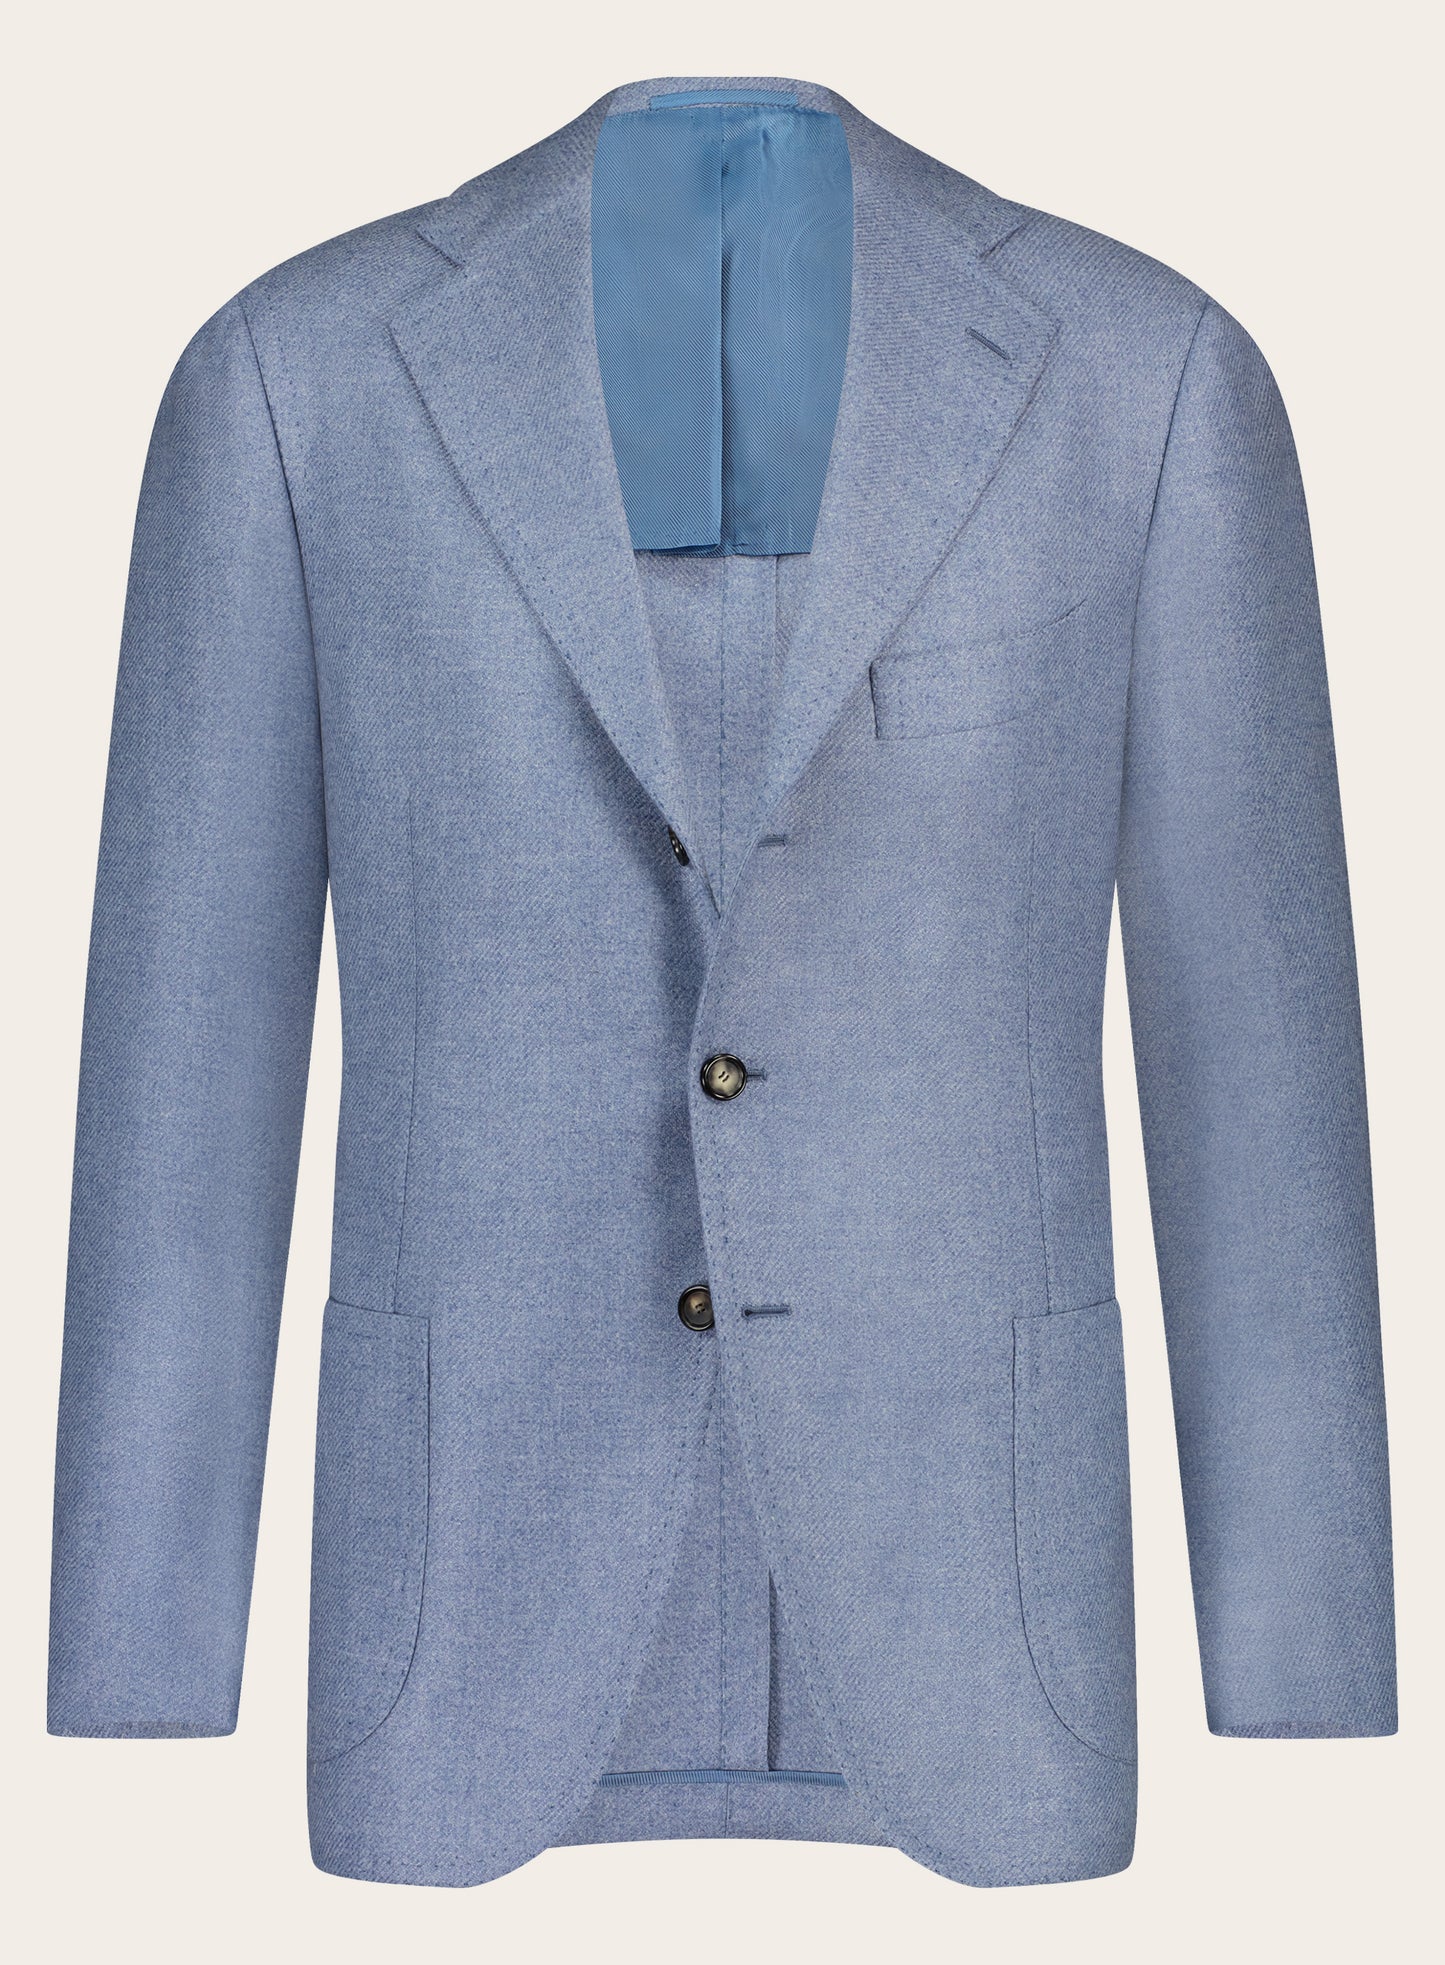 Handgemaakt jasje van cashmere | L.Blauw